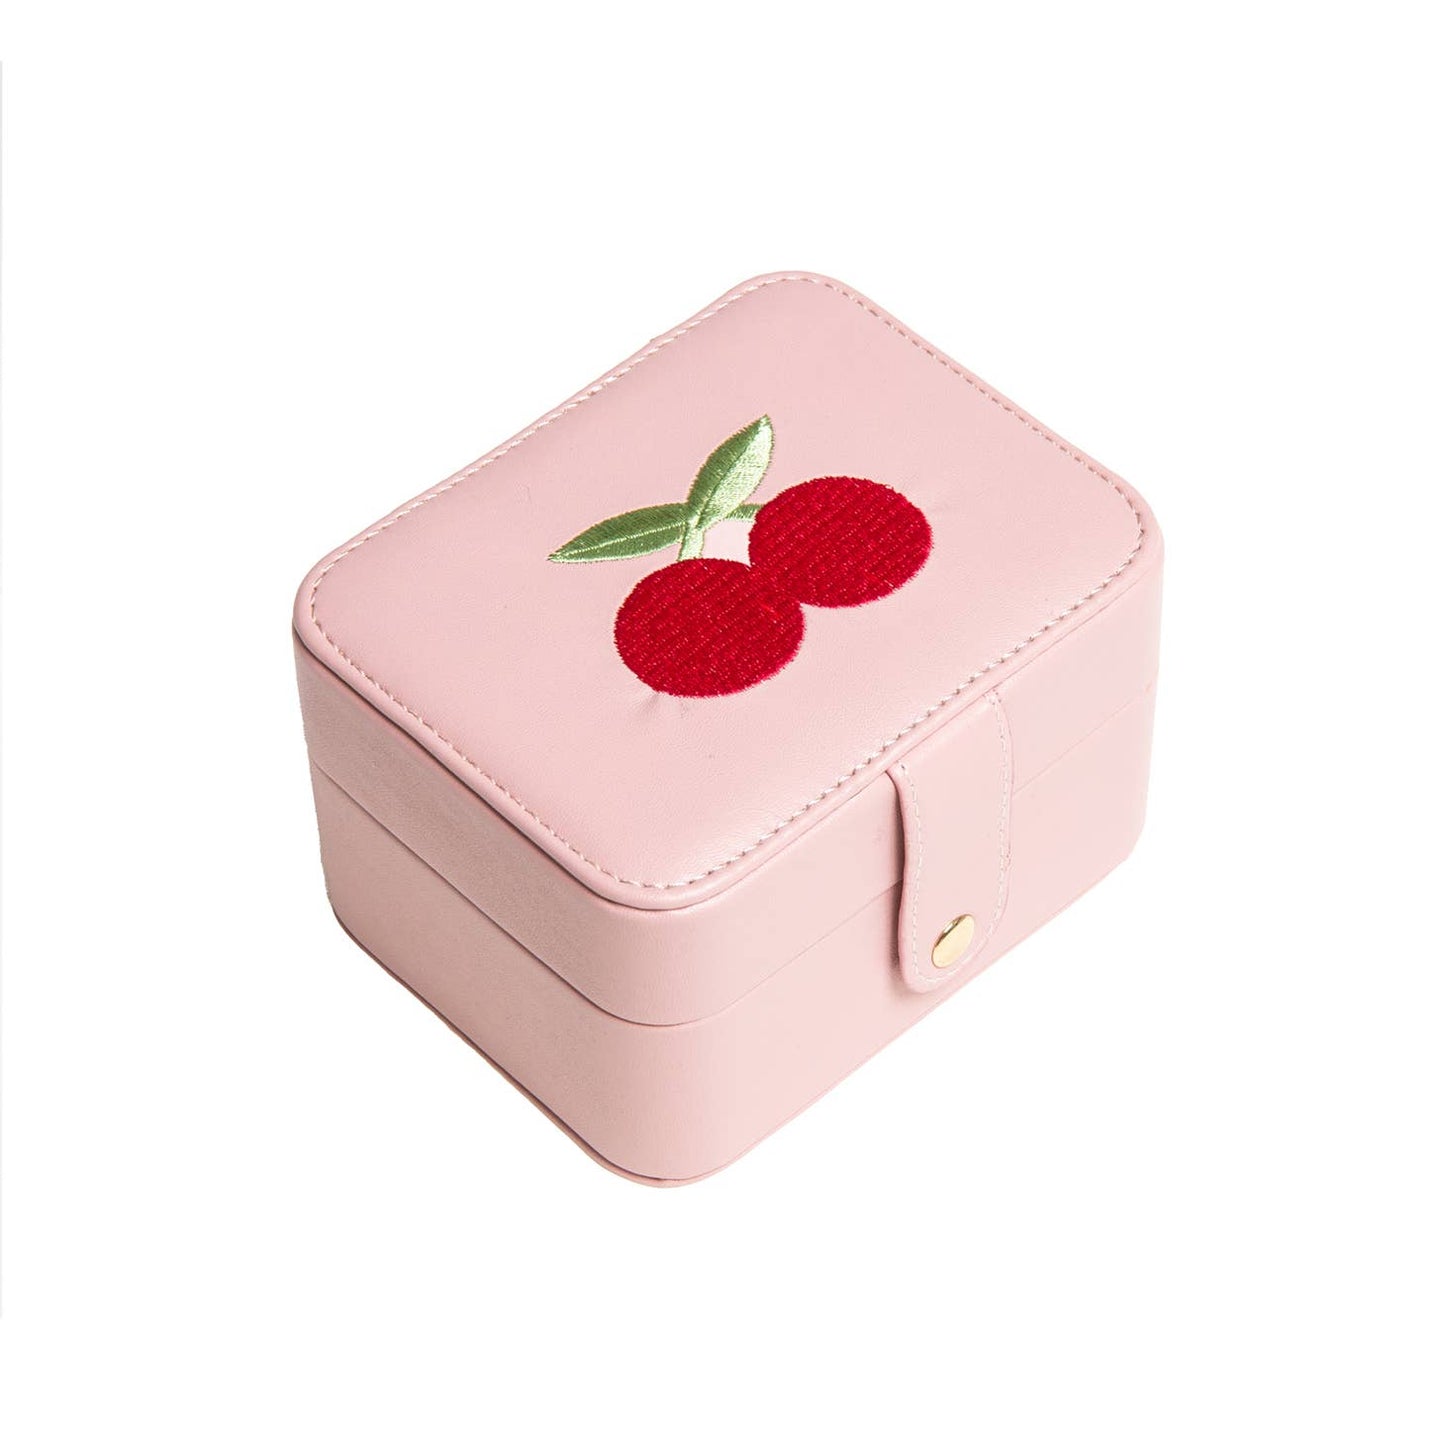 Rockahula sweet cherry jewelry box